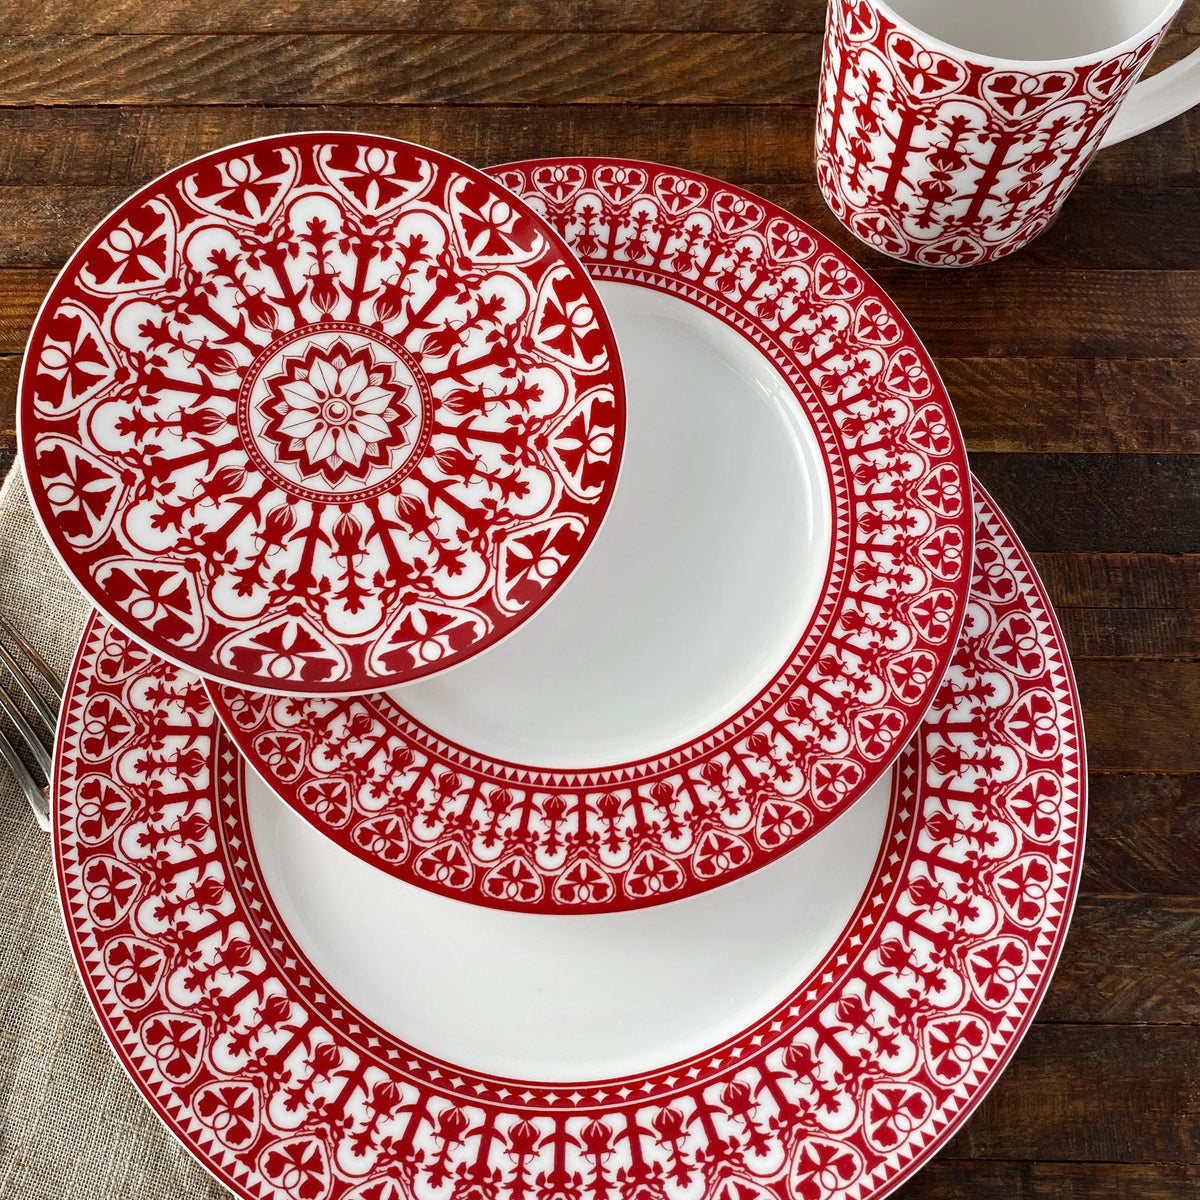 Casablanca Crimson Mug porcelain dinnerware on a wooden table.